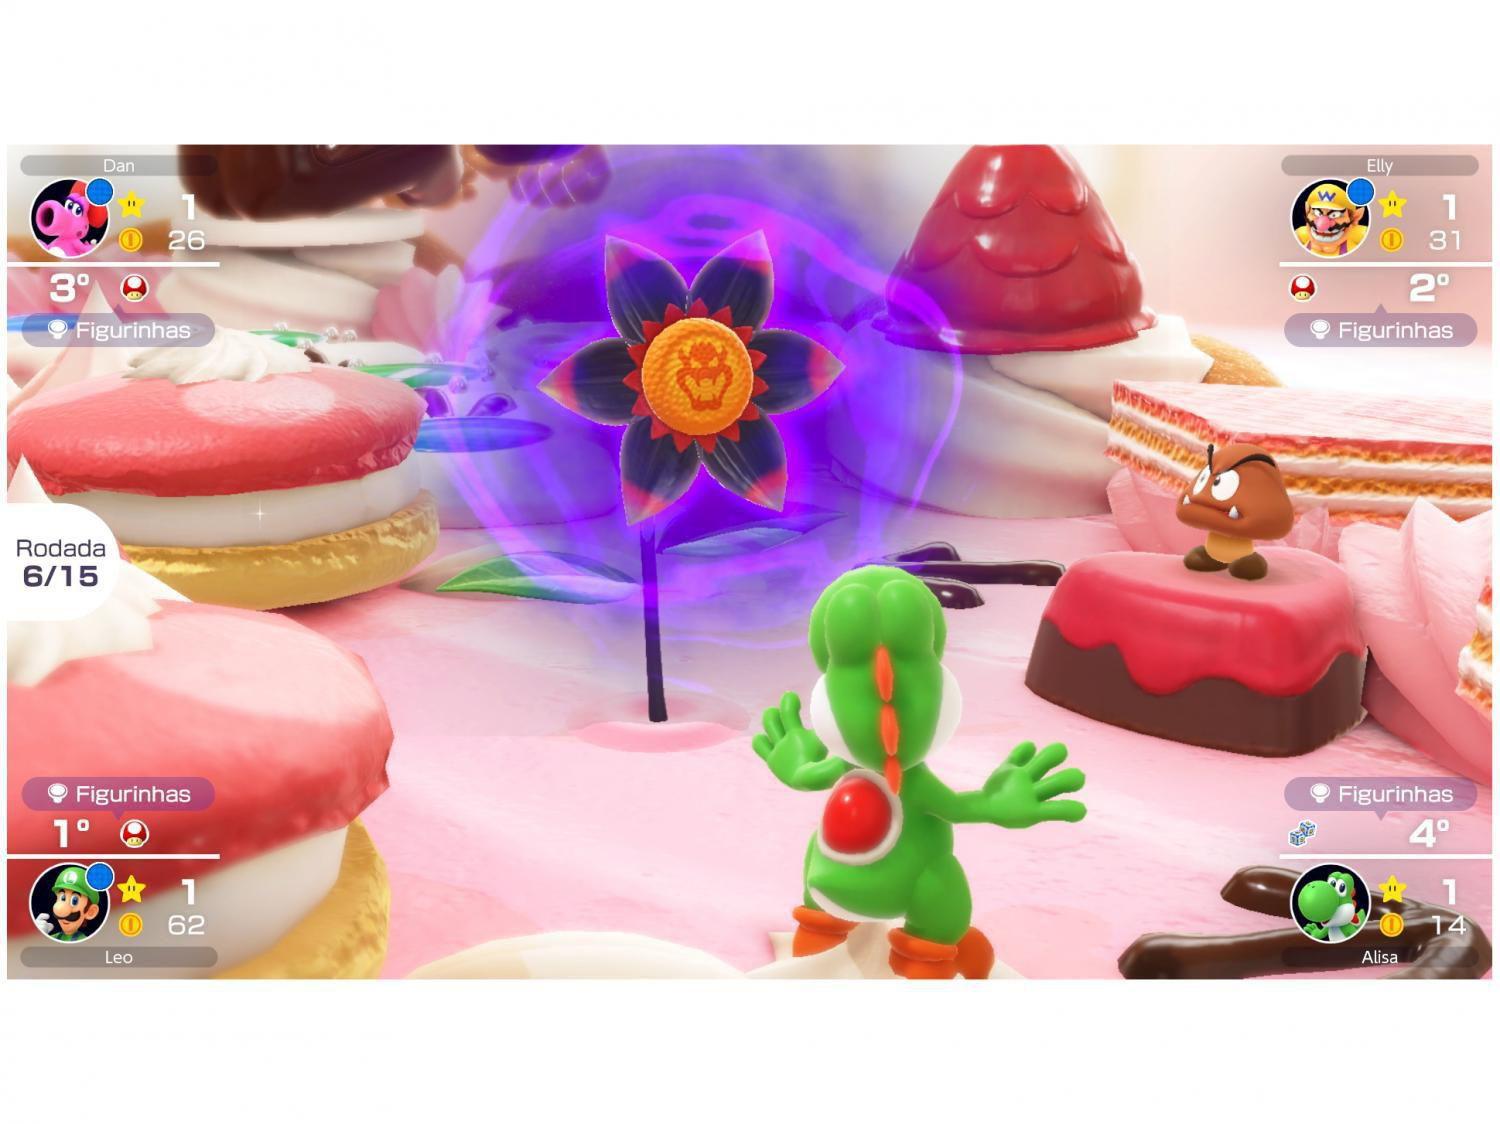 Mario Party Superstars, Jogos para a Nintendo Switch